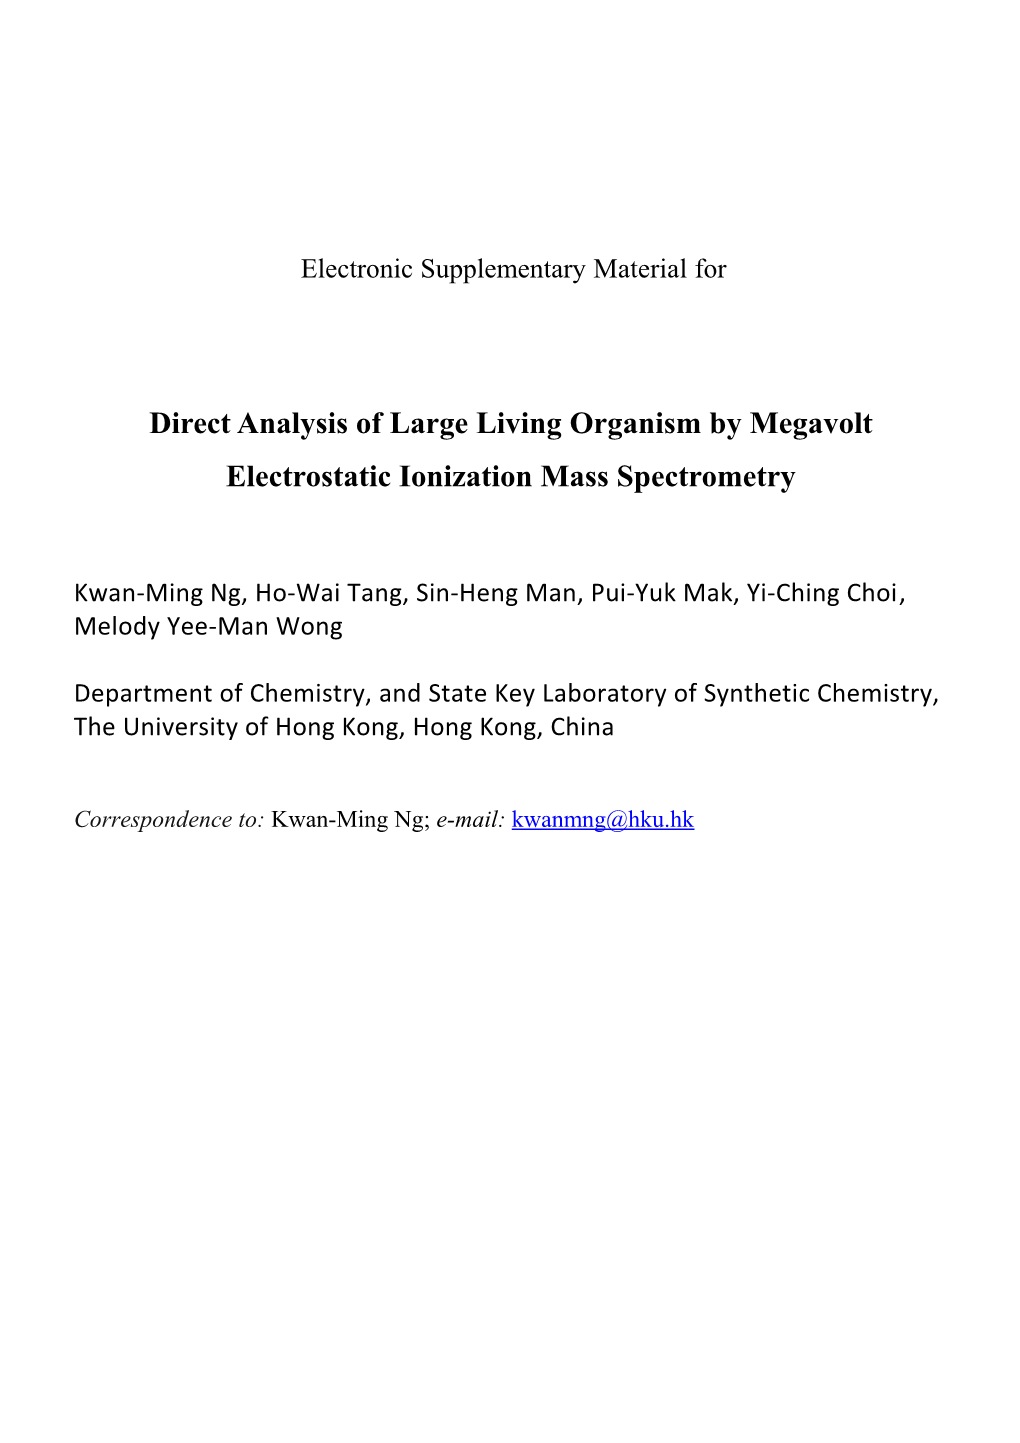 Direct Analysis of Large Living Organism by Megavolt Electrostatic Ionization Mass Spectrometry